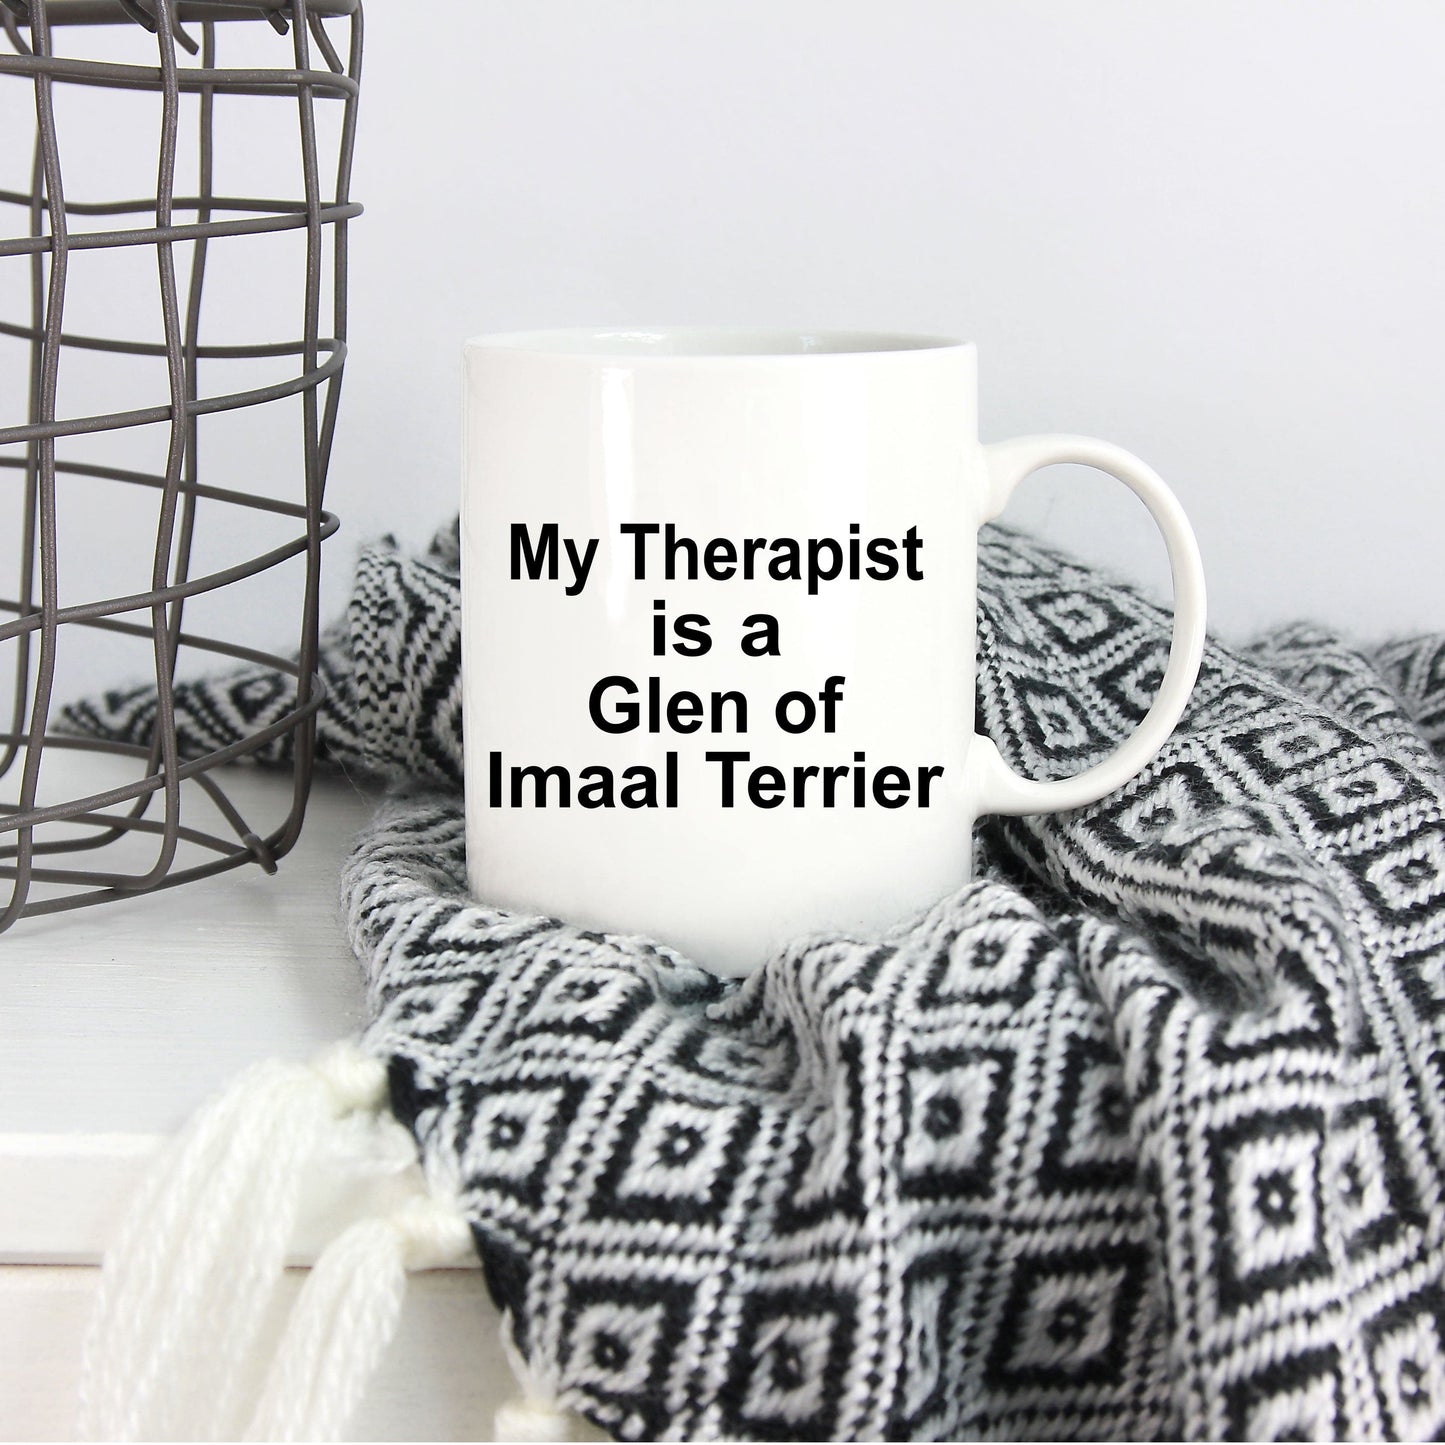 Glen of Imaal Terrier Dog Owner Lover Funny Gift Therapist White Ceramic Coffee Mug